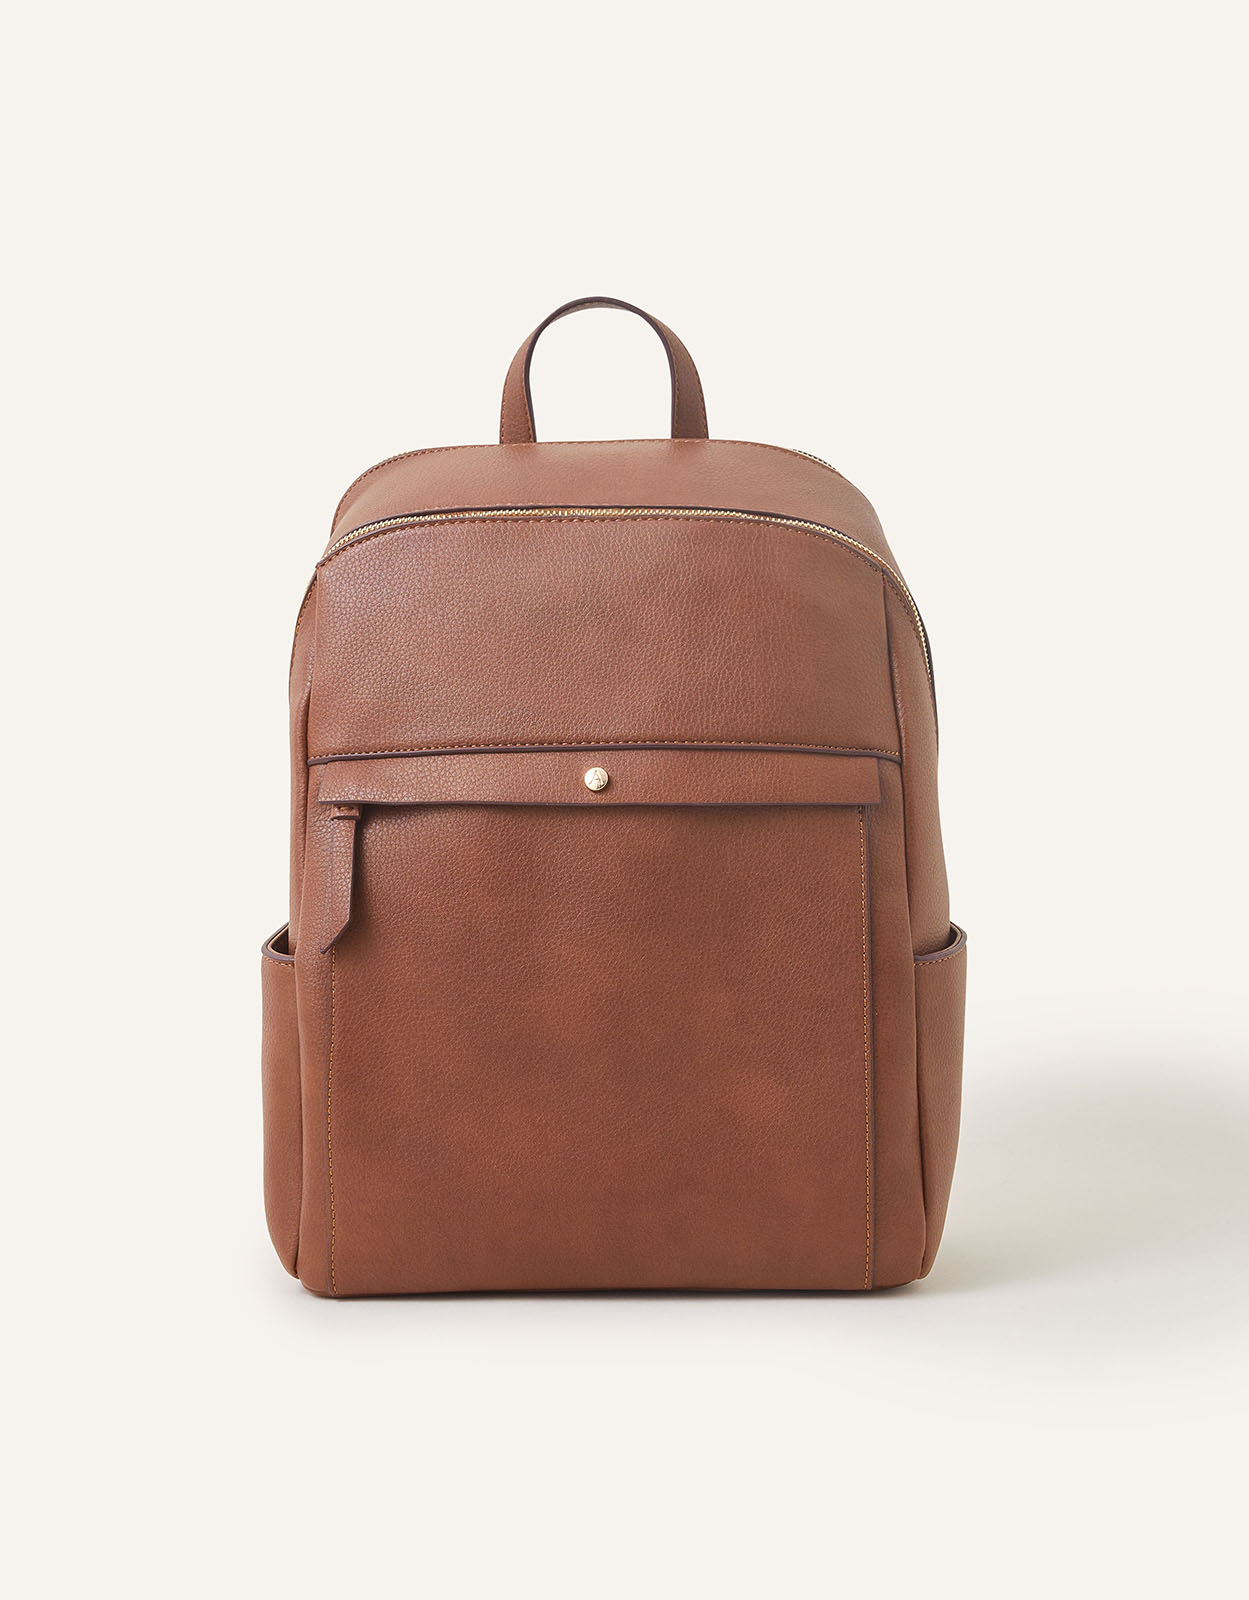 Accessorize Women's Tan Brown Smart Sammy Backpack, Size: 36x28cm